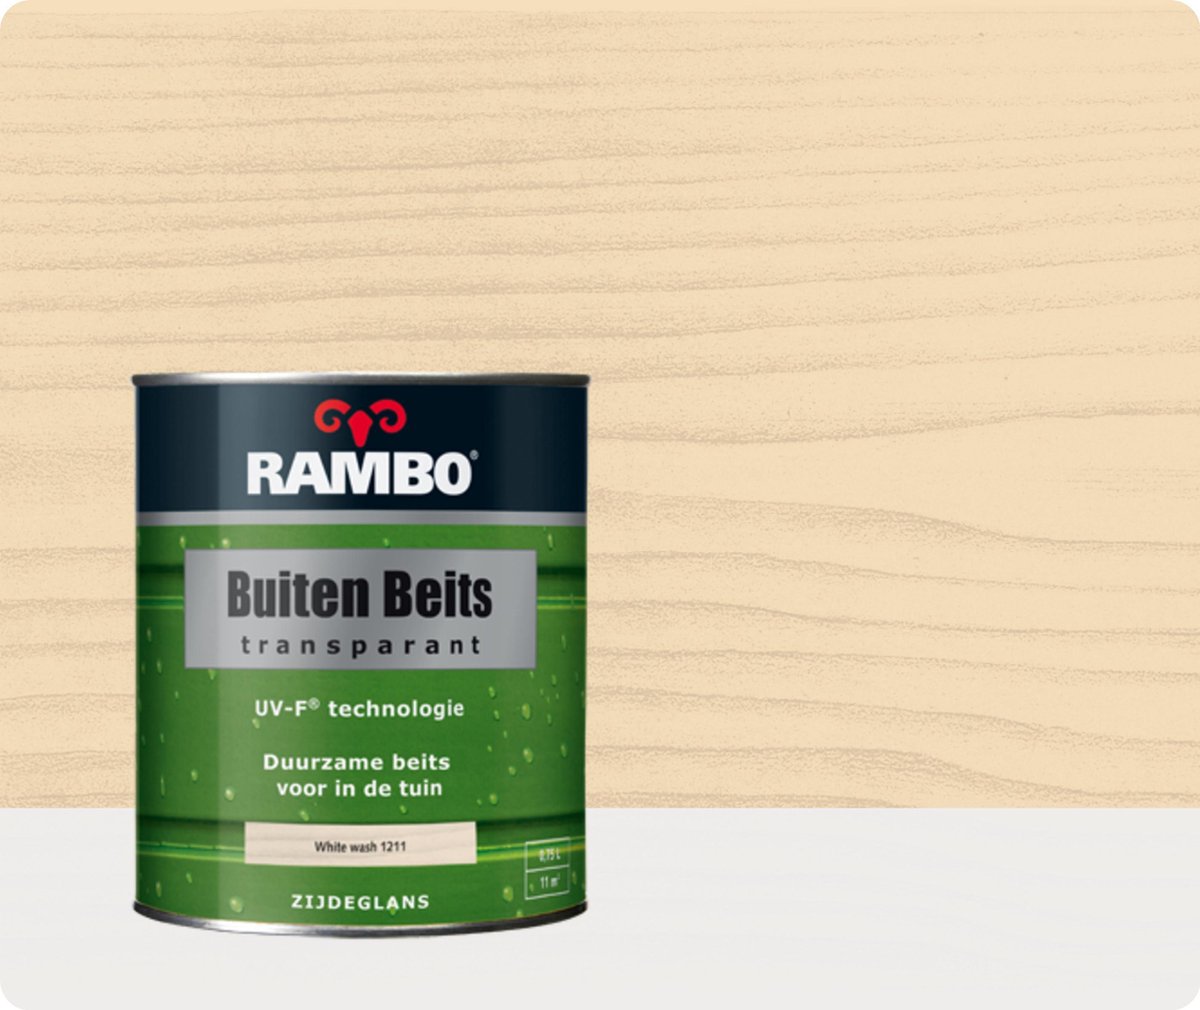 Regenjas Alsjeblieft kijk papier Rambo Buiten Beits Transparant 0,75 liter - Whitewash | bol.com